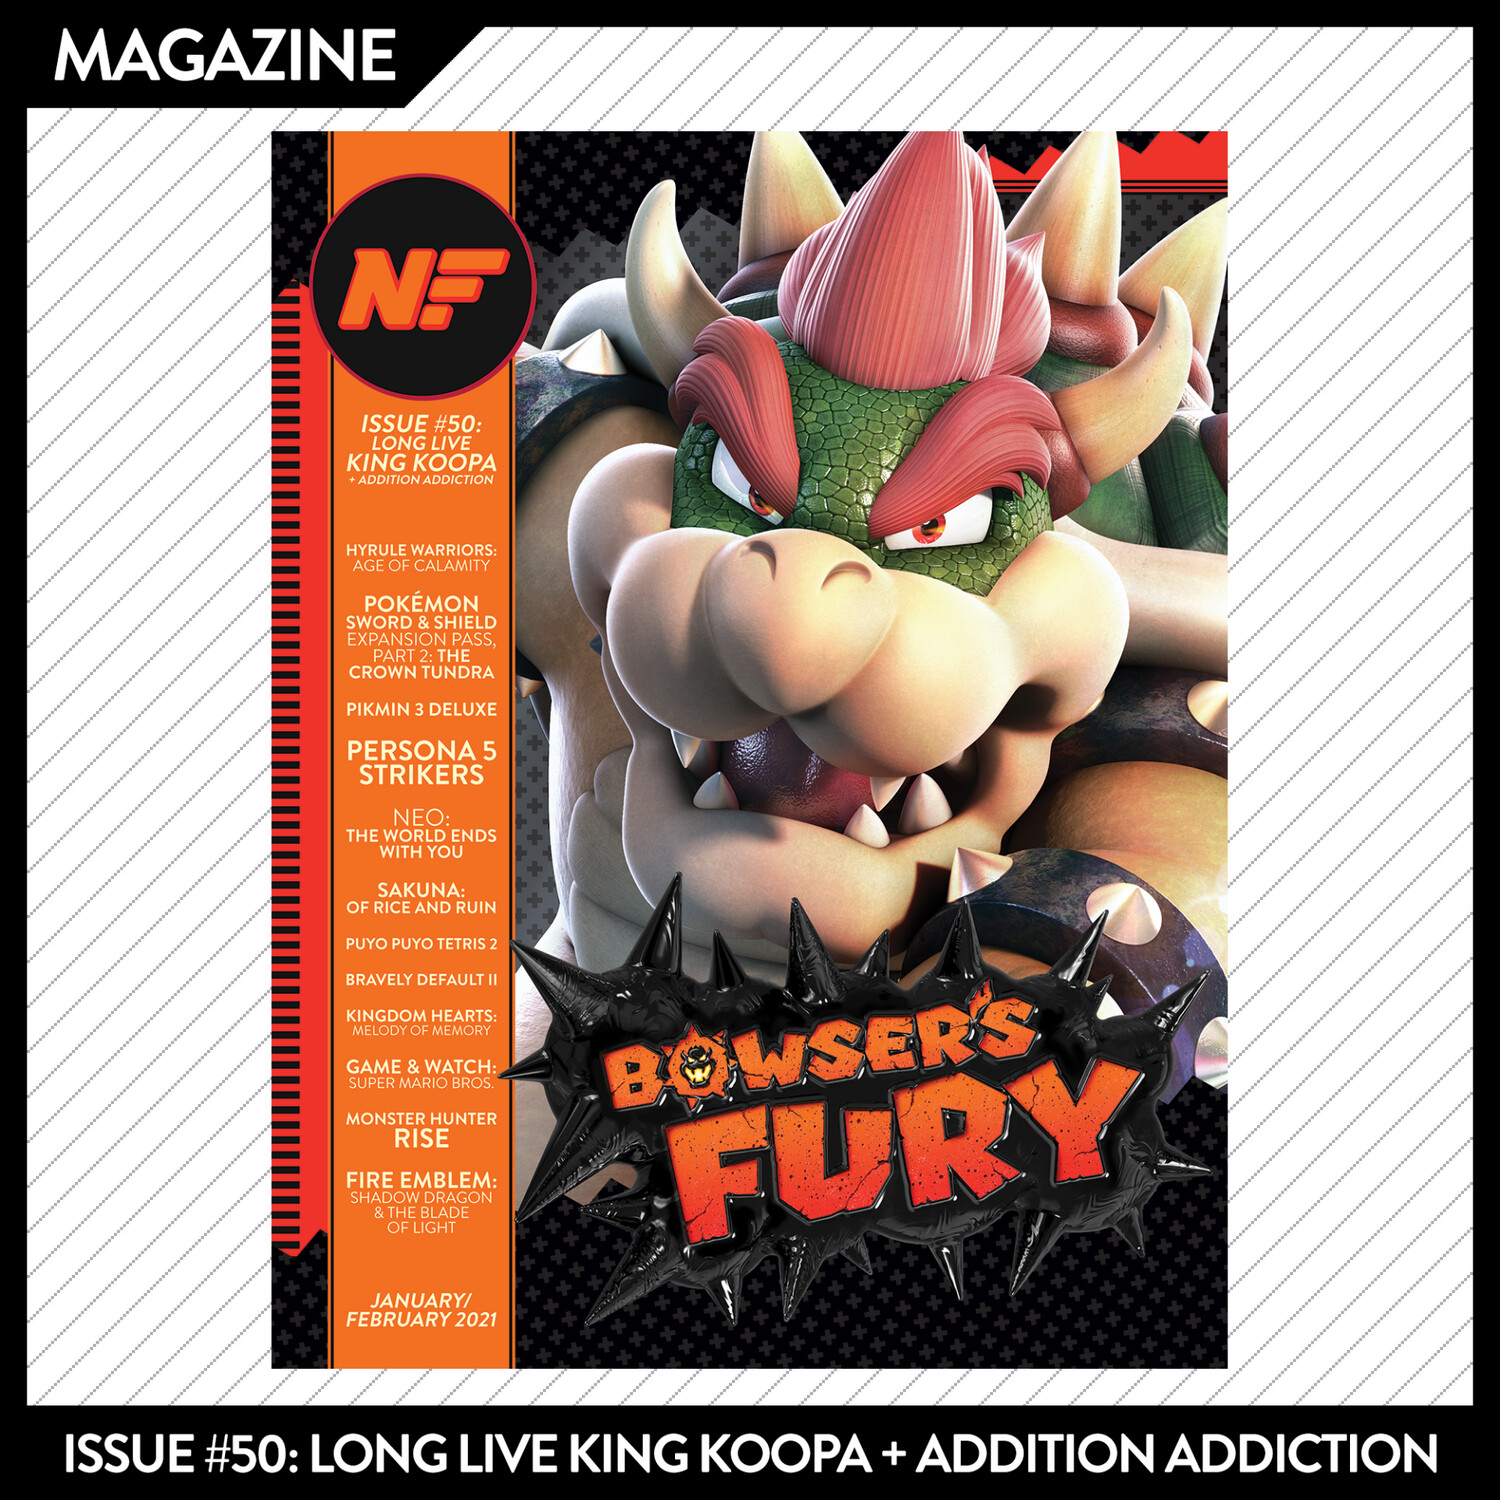 Issue #50: Long Live King Koopa + Addition Addiction – January/February 2021